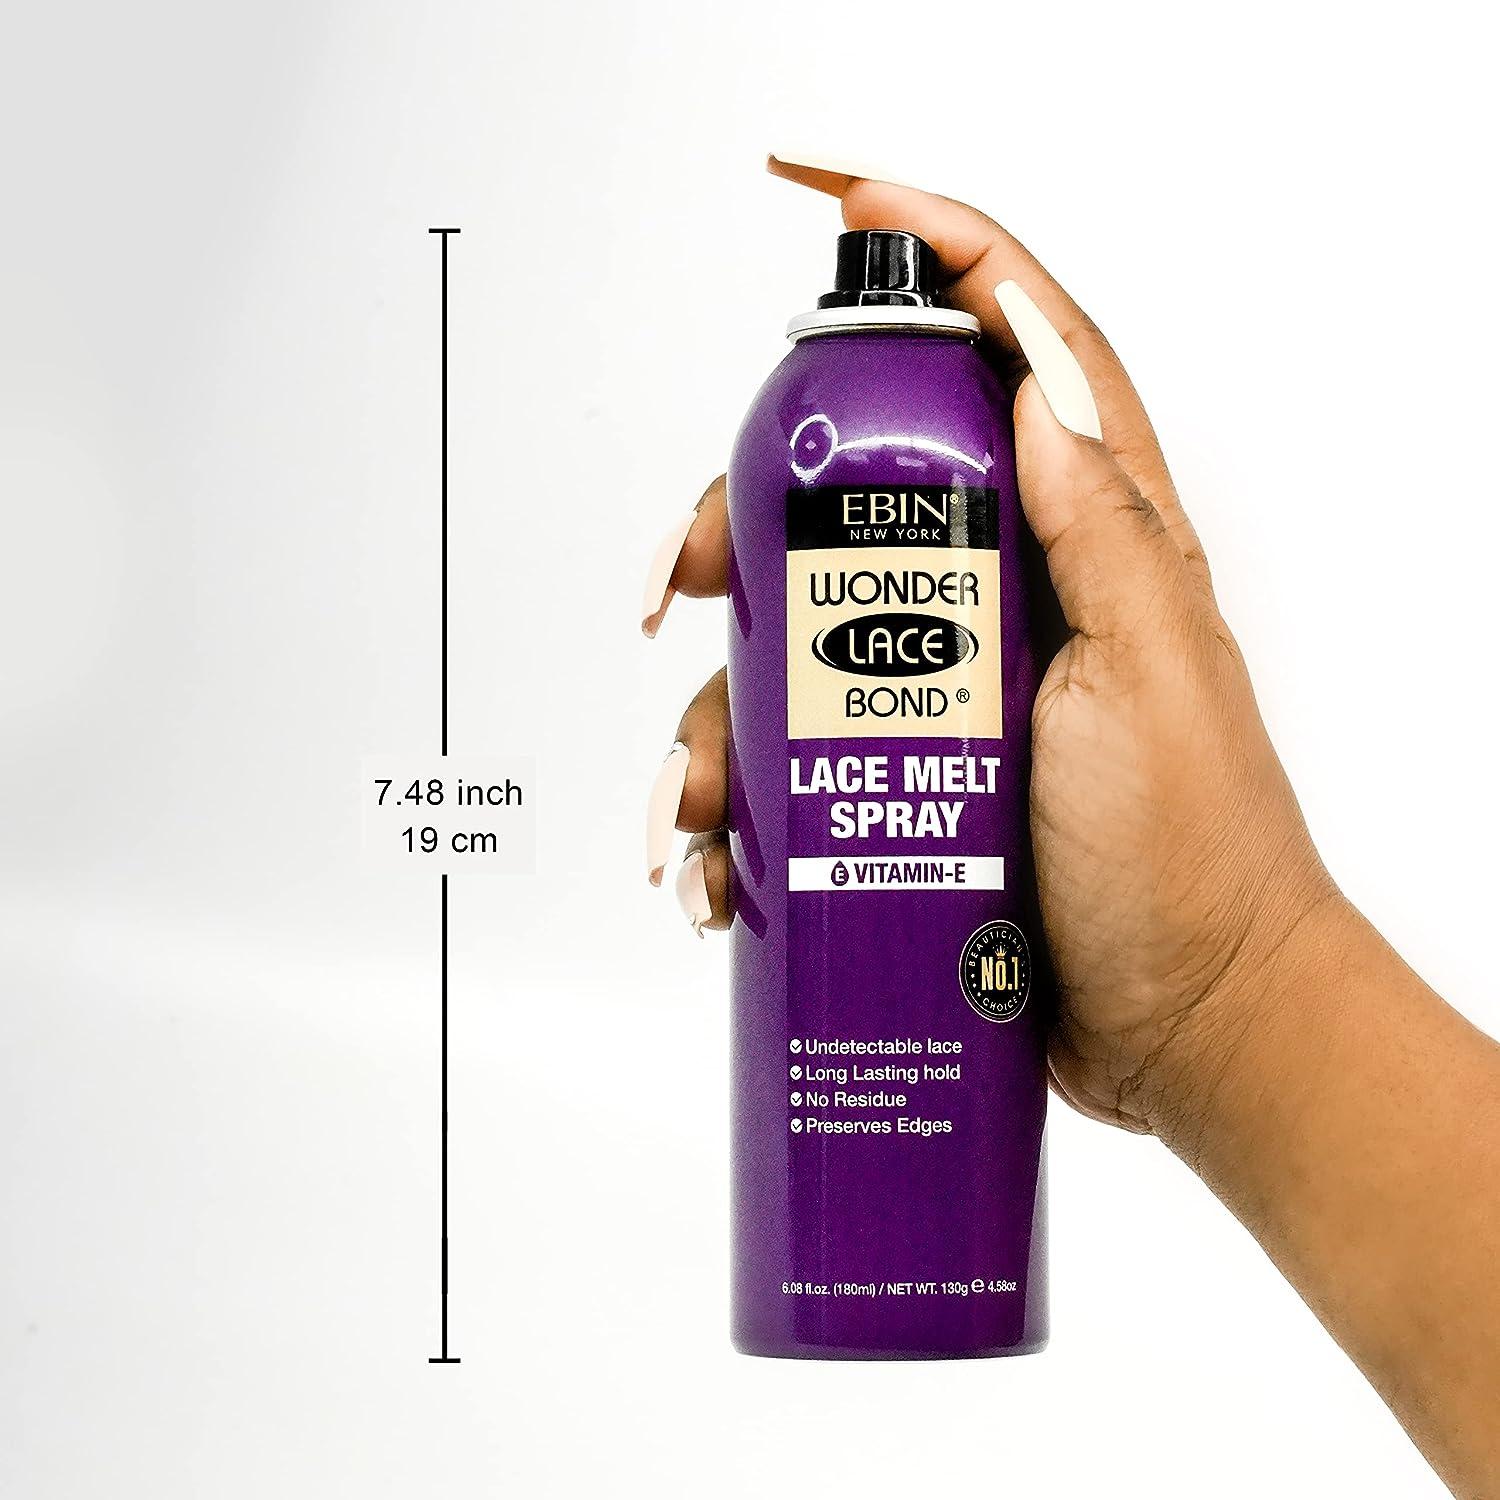  Wonder Lace Melt Aerosol Spray, Preserves Edges & Undetectable  Lace, Long lasting hold, No Residue